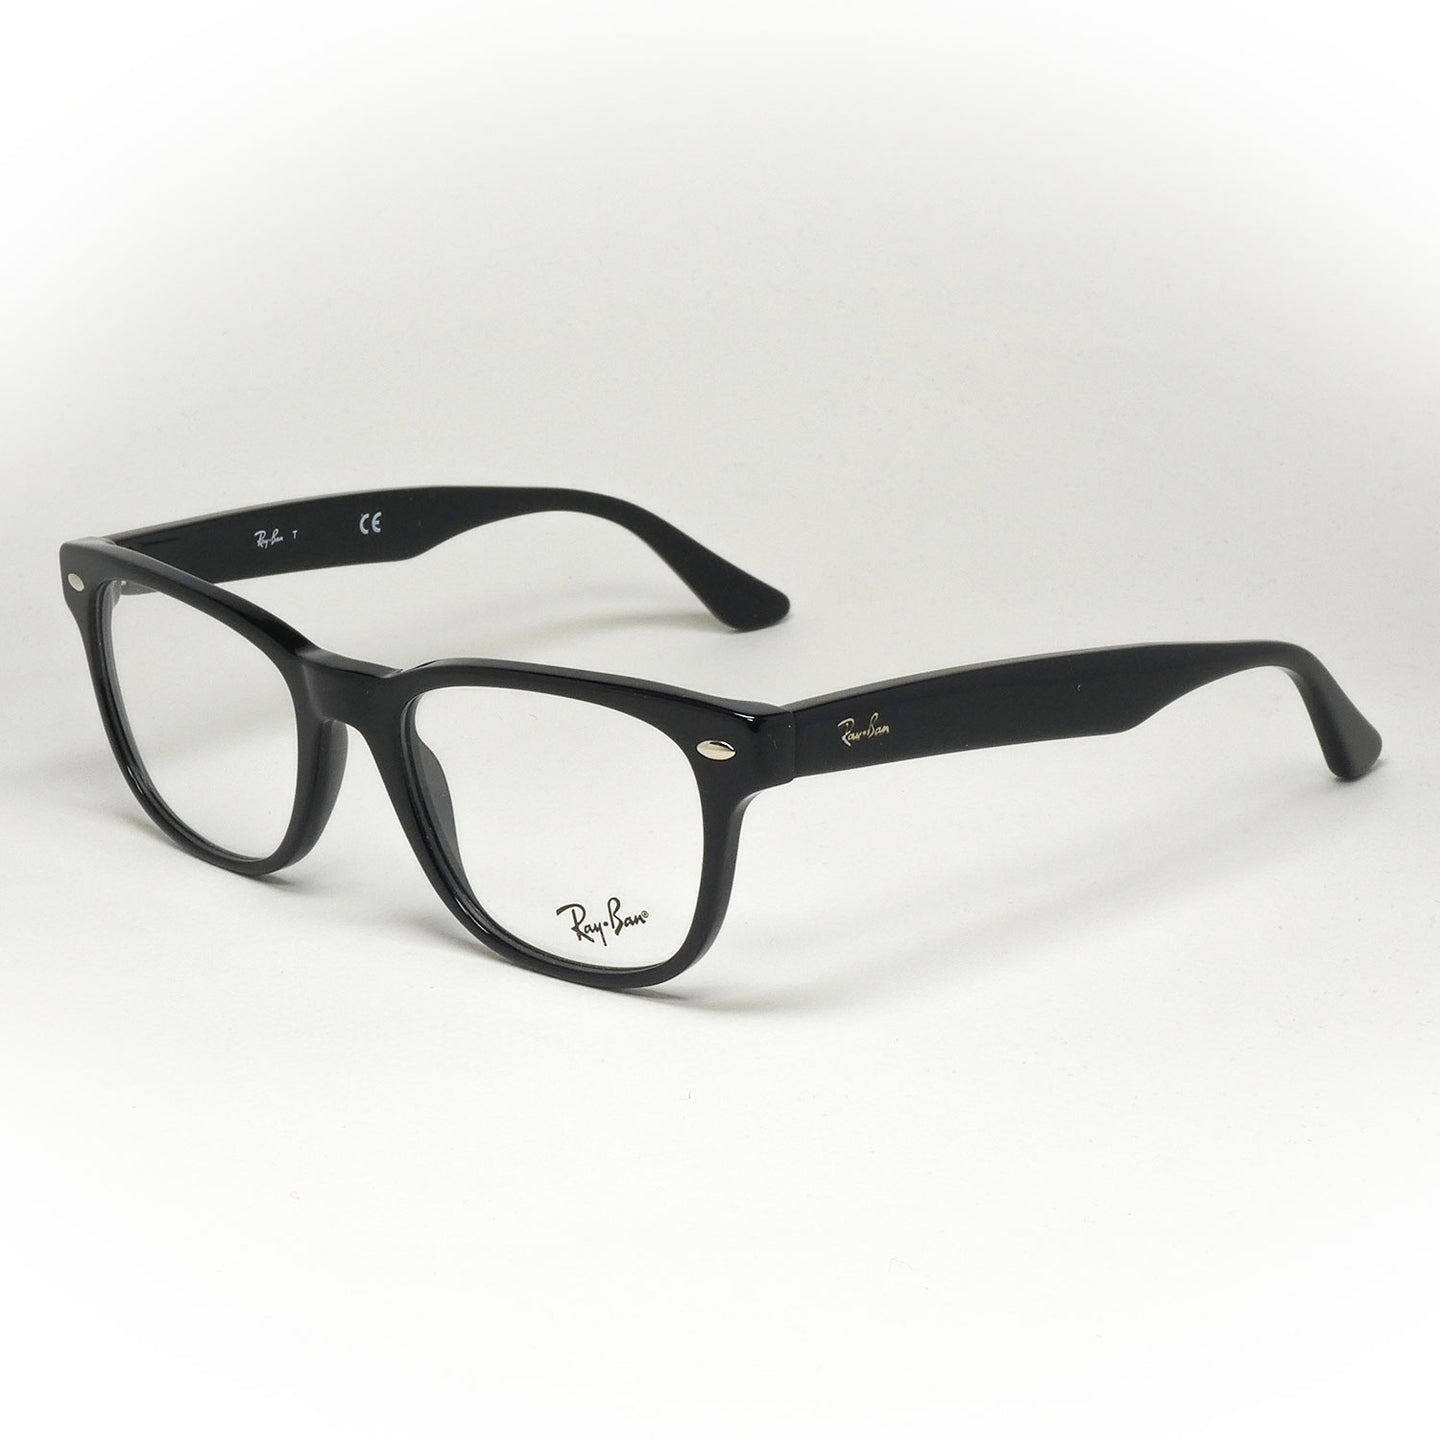 Vision glasses Ray Ban RB 5359 Color 2000 angled view